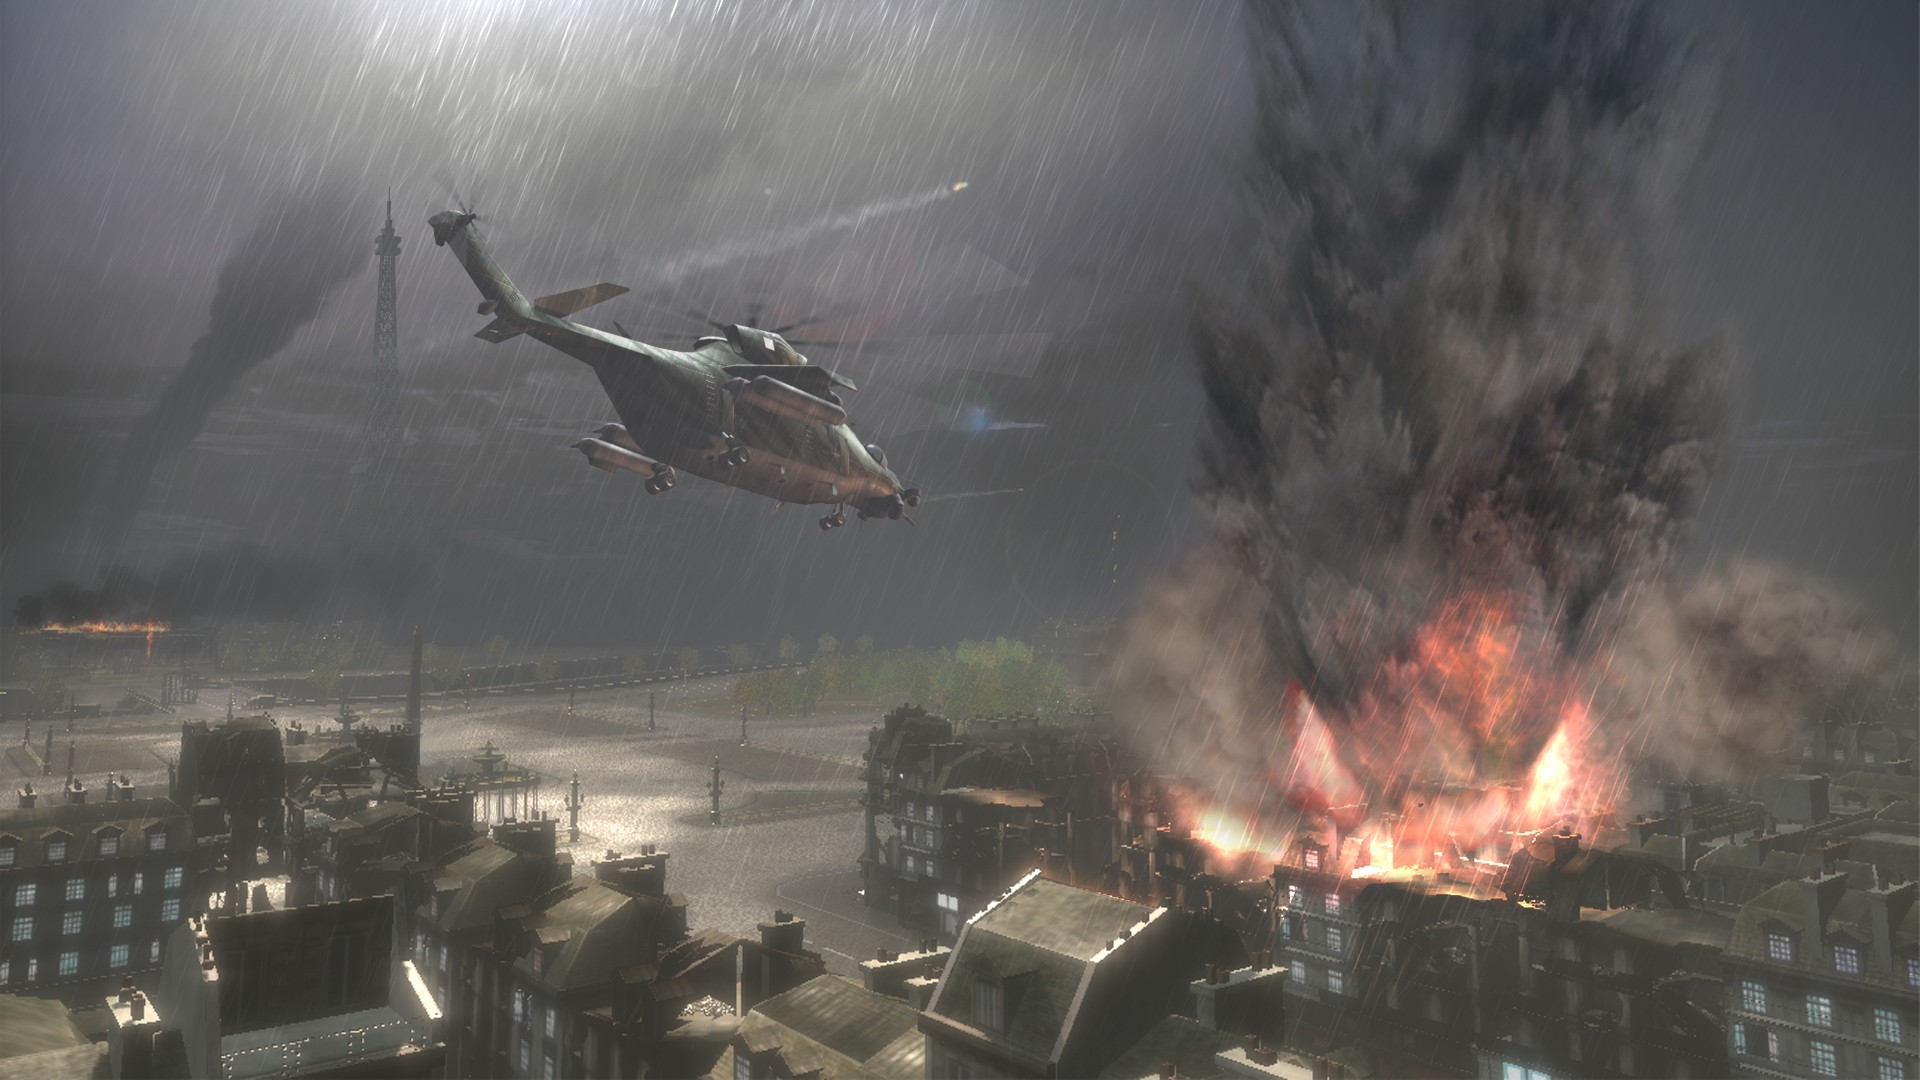 General 1920x1080 digital art helicopters Tom Clancy's EndWar Online PC gaming screen shot vehicle